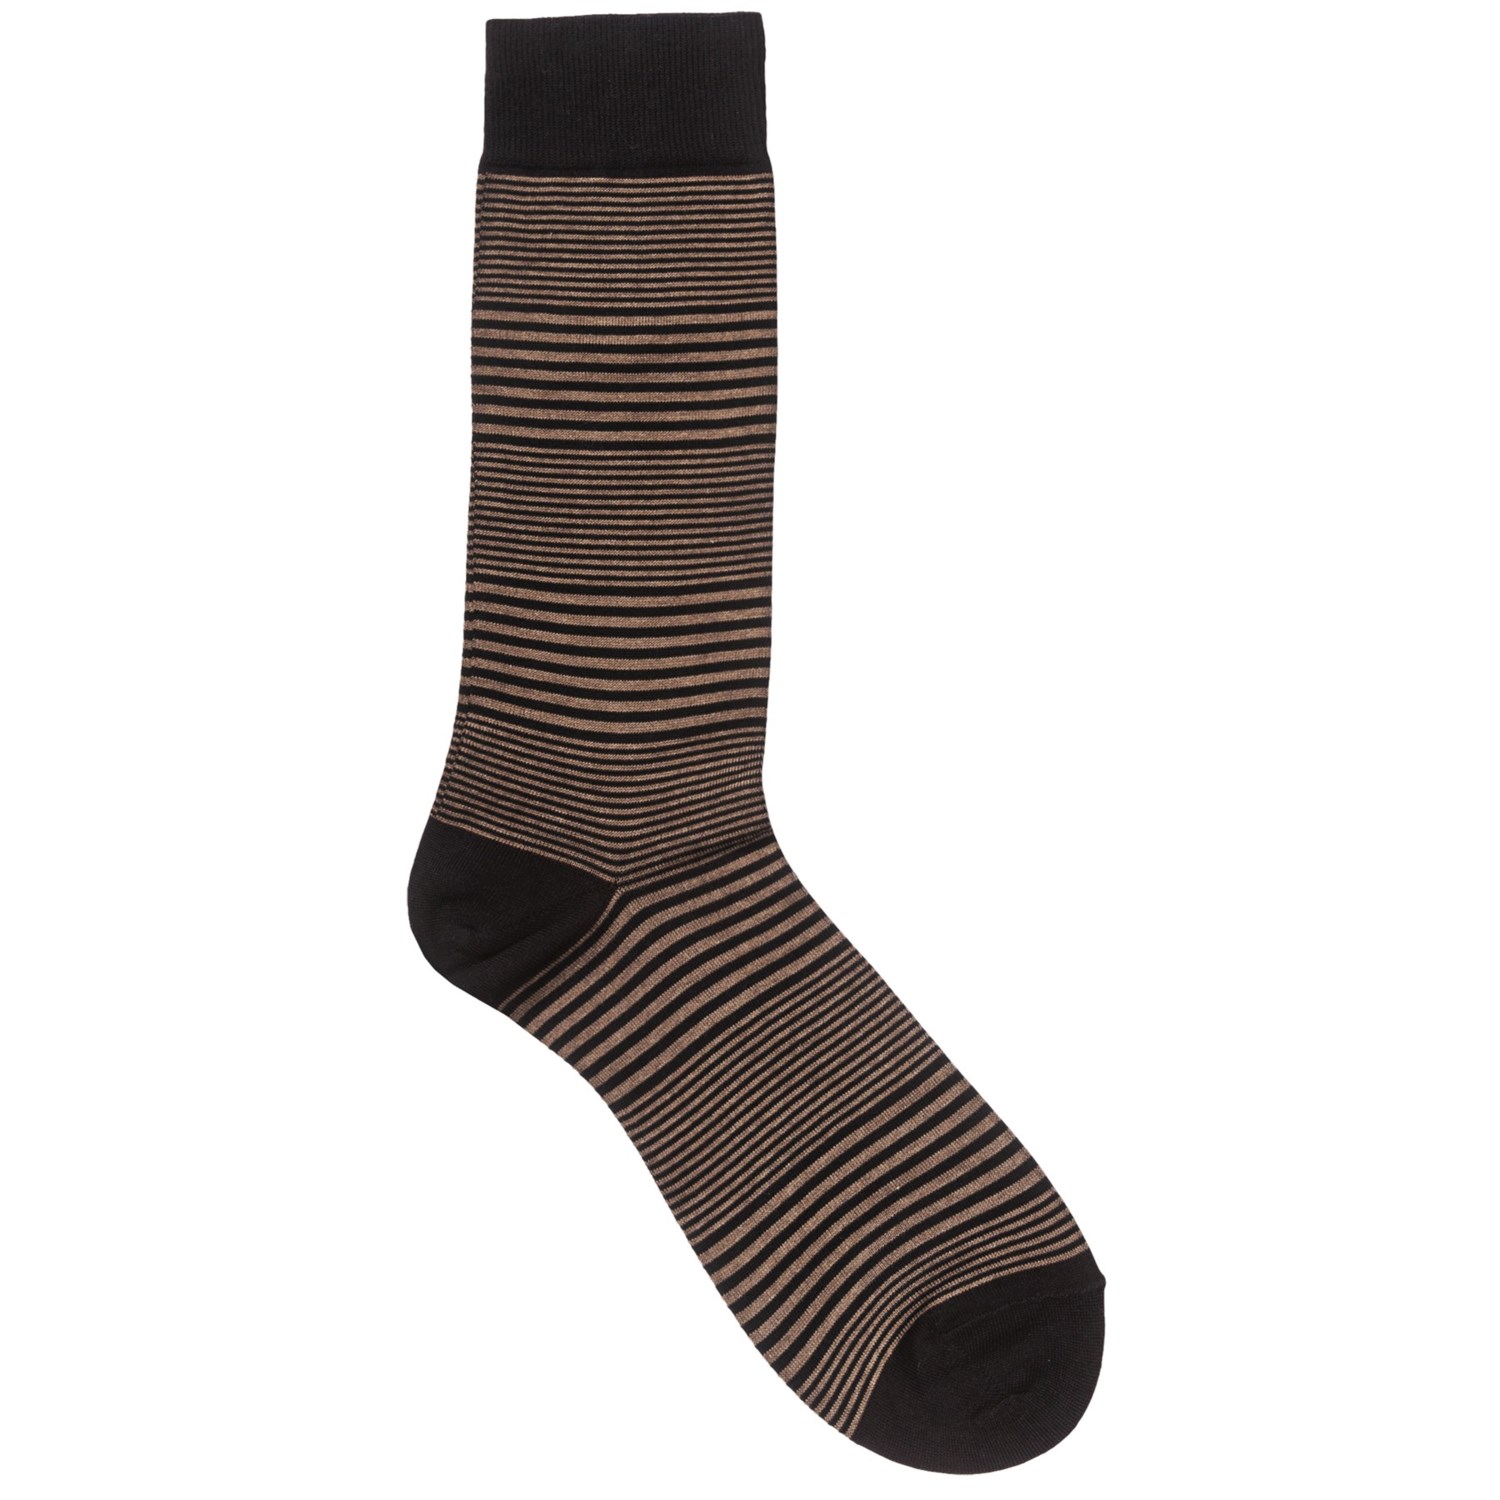 Pantherella Crew Dress Socks - Cotton-Nylon (For Men) - Save 40%